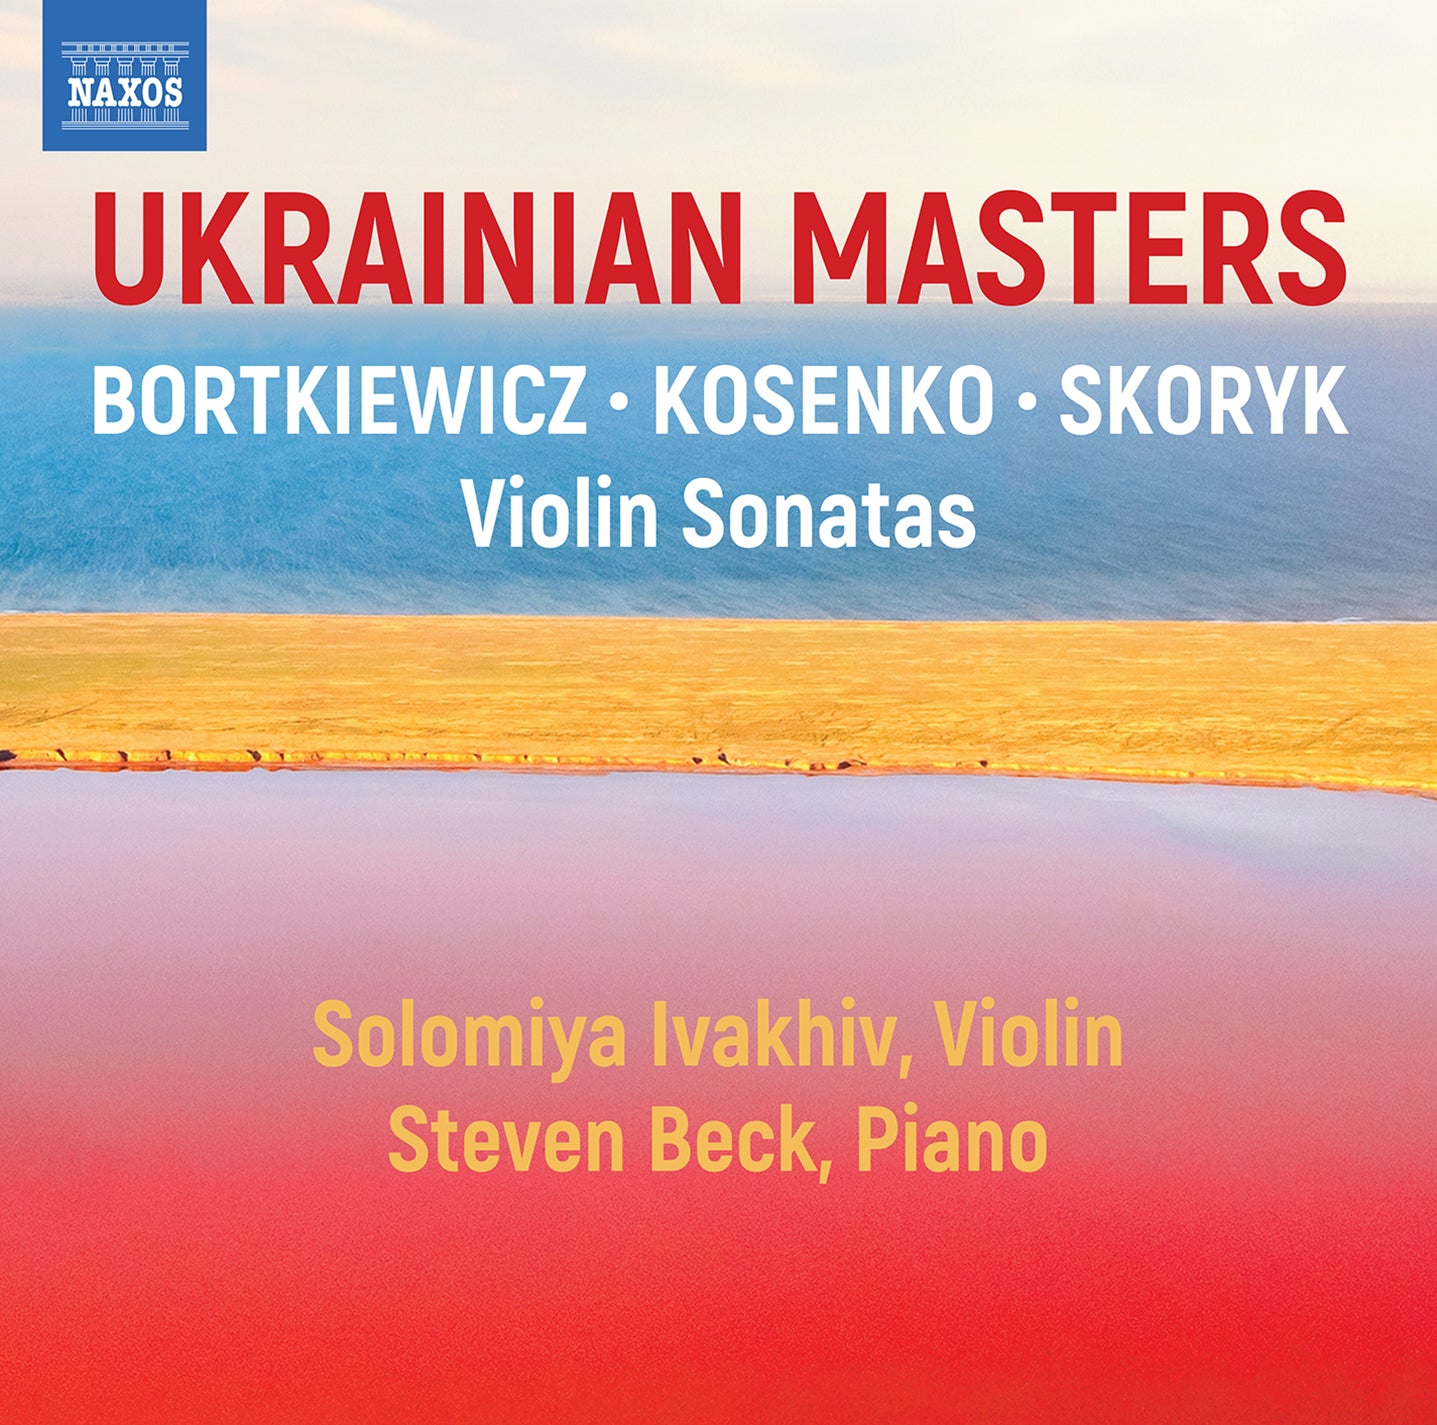 Ukrainian Masters - Bortkiewicz, Kosenko, & Skoryk: Violin Sonatas / Ivakhiv, Beck